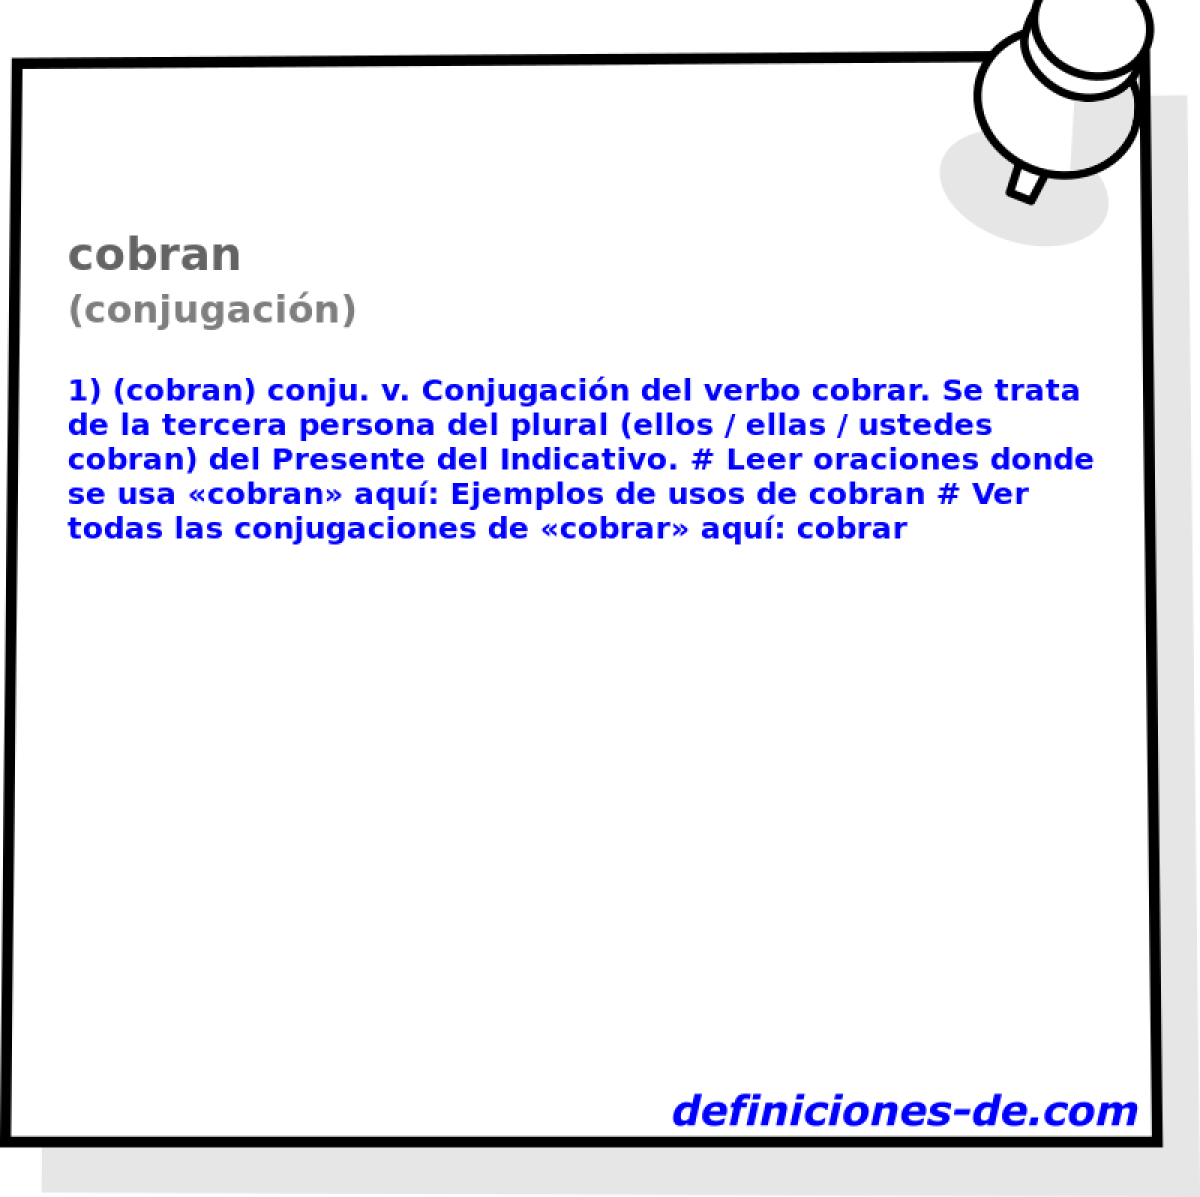 cobran (conjugacin)